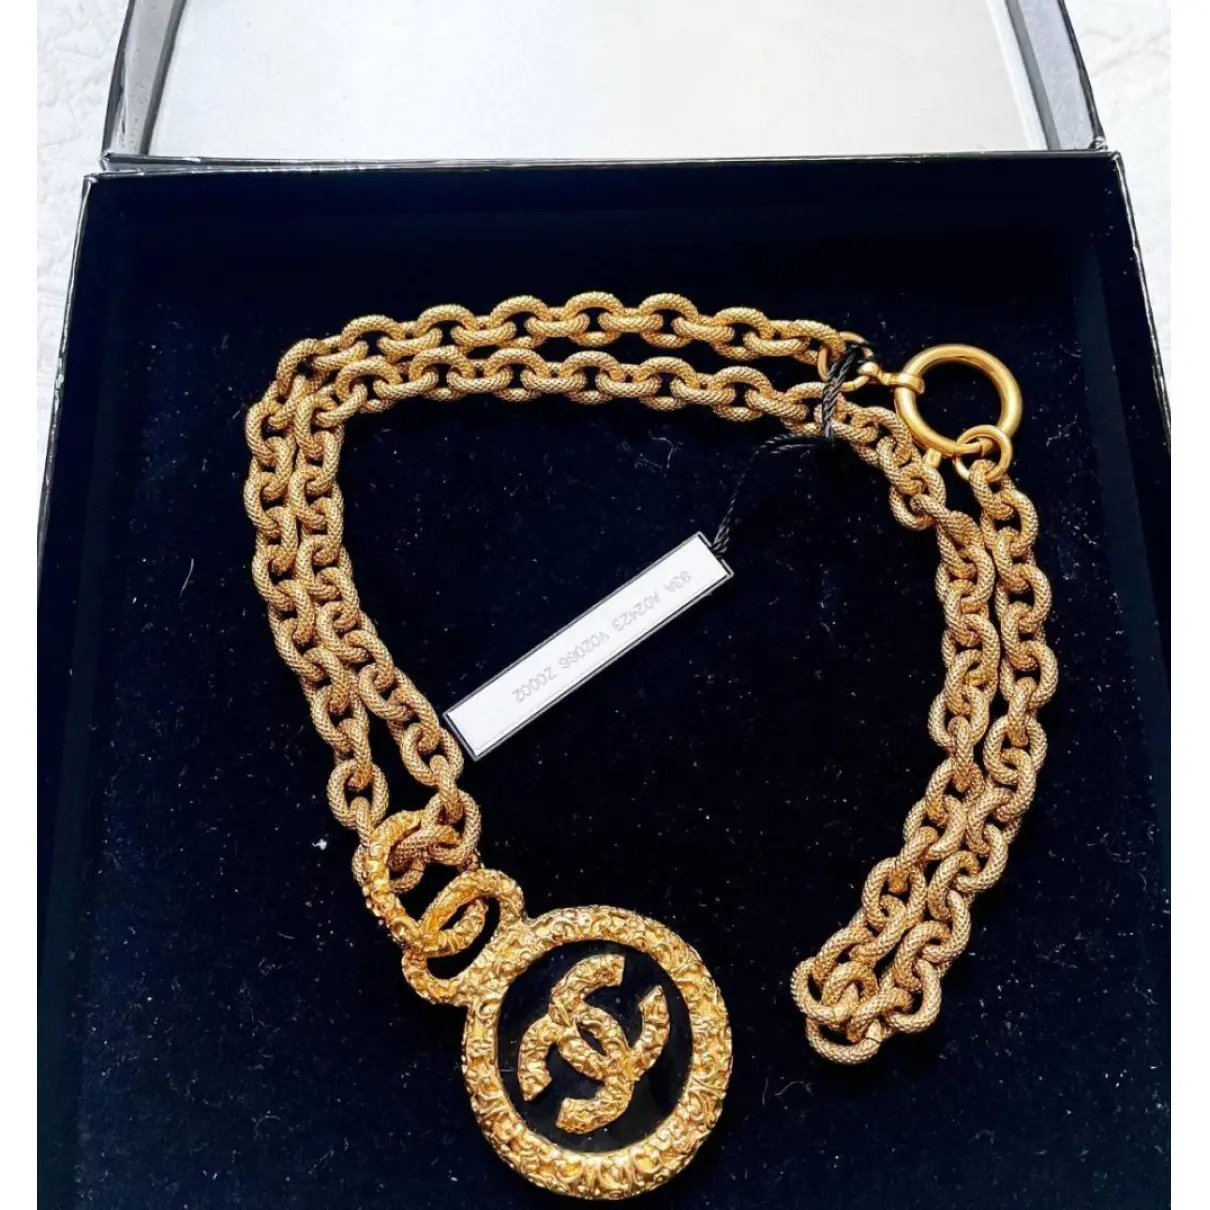 Luxury Chanel Necklaces Women